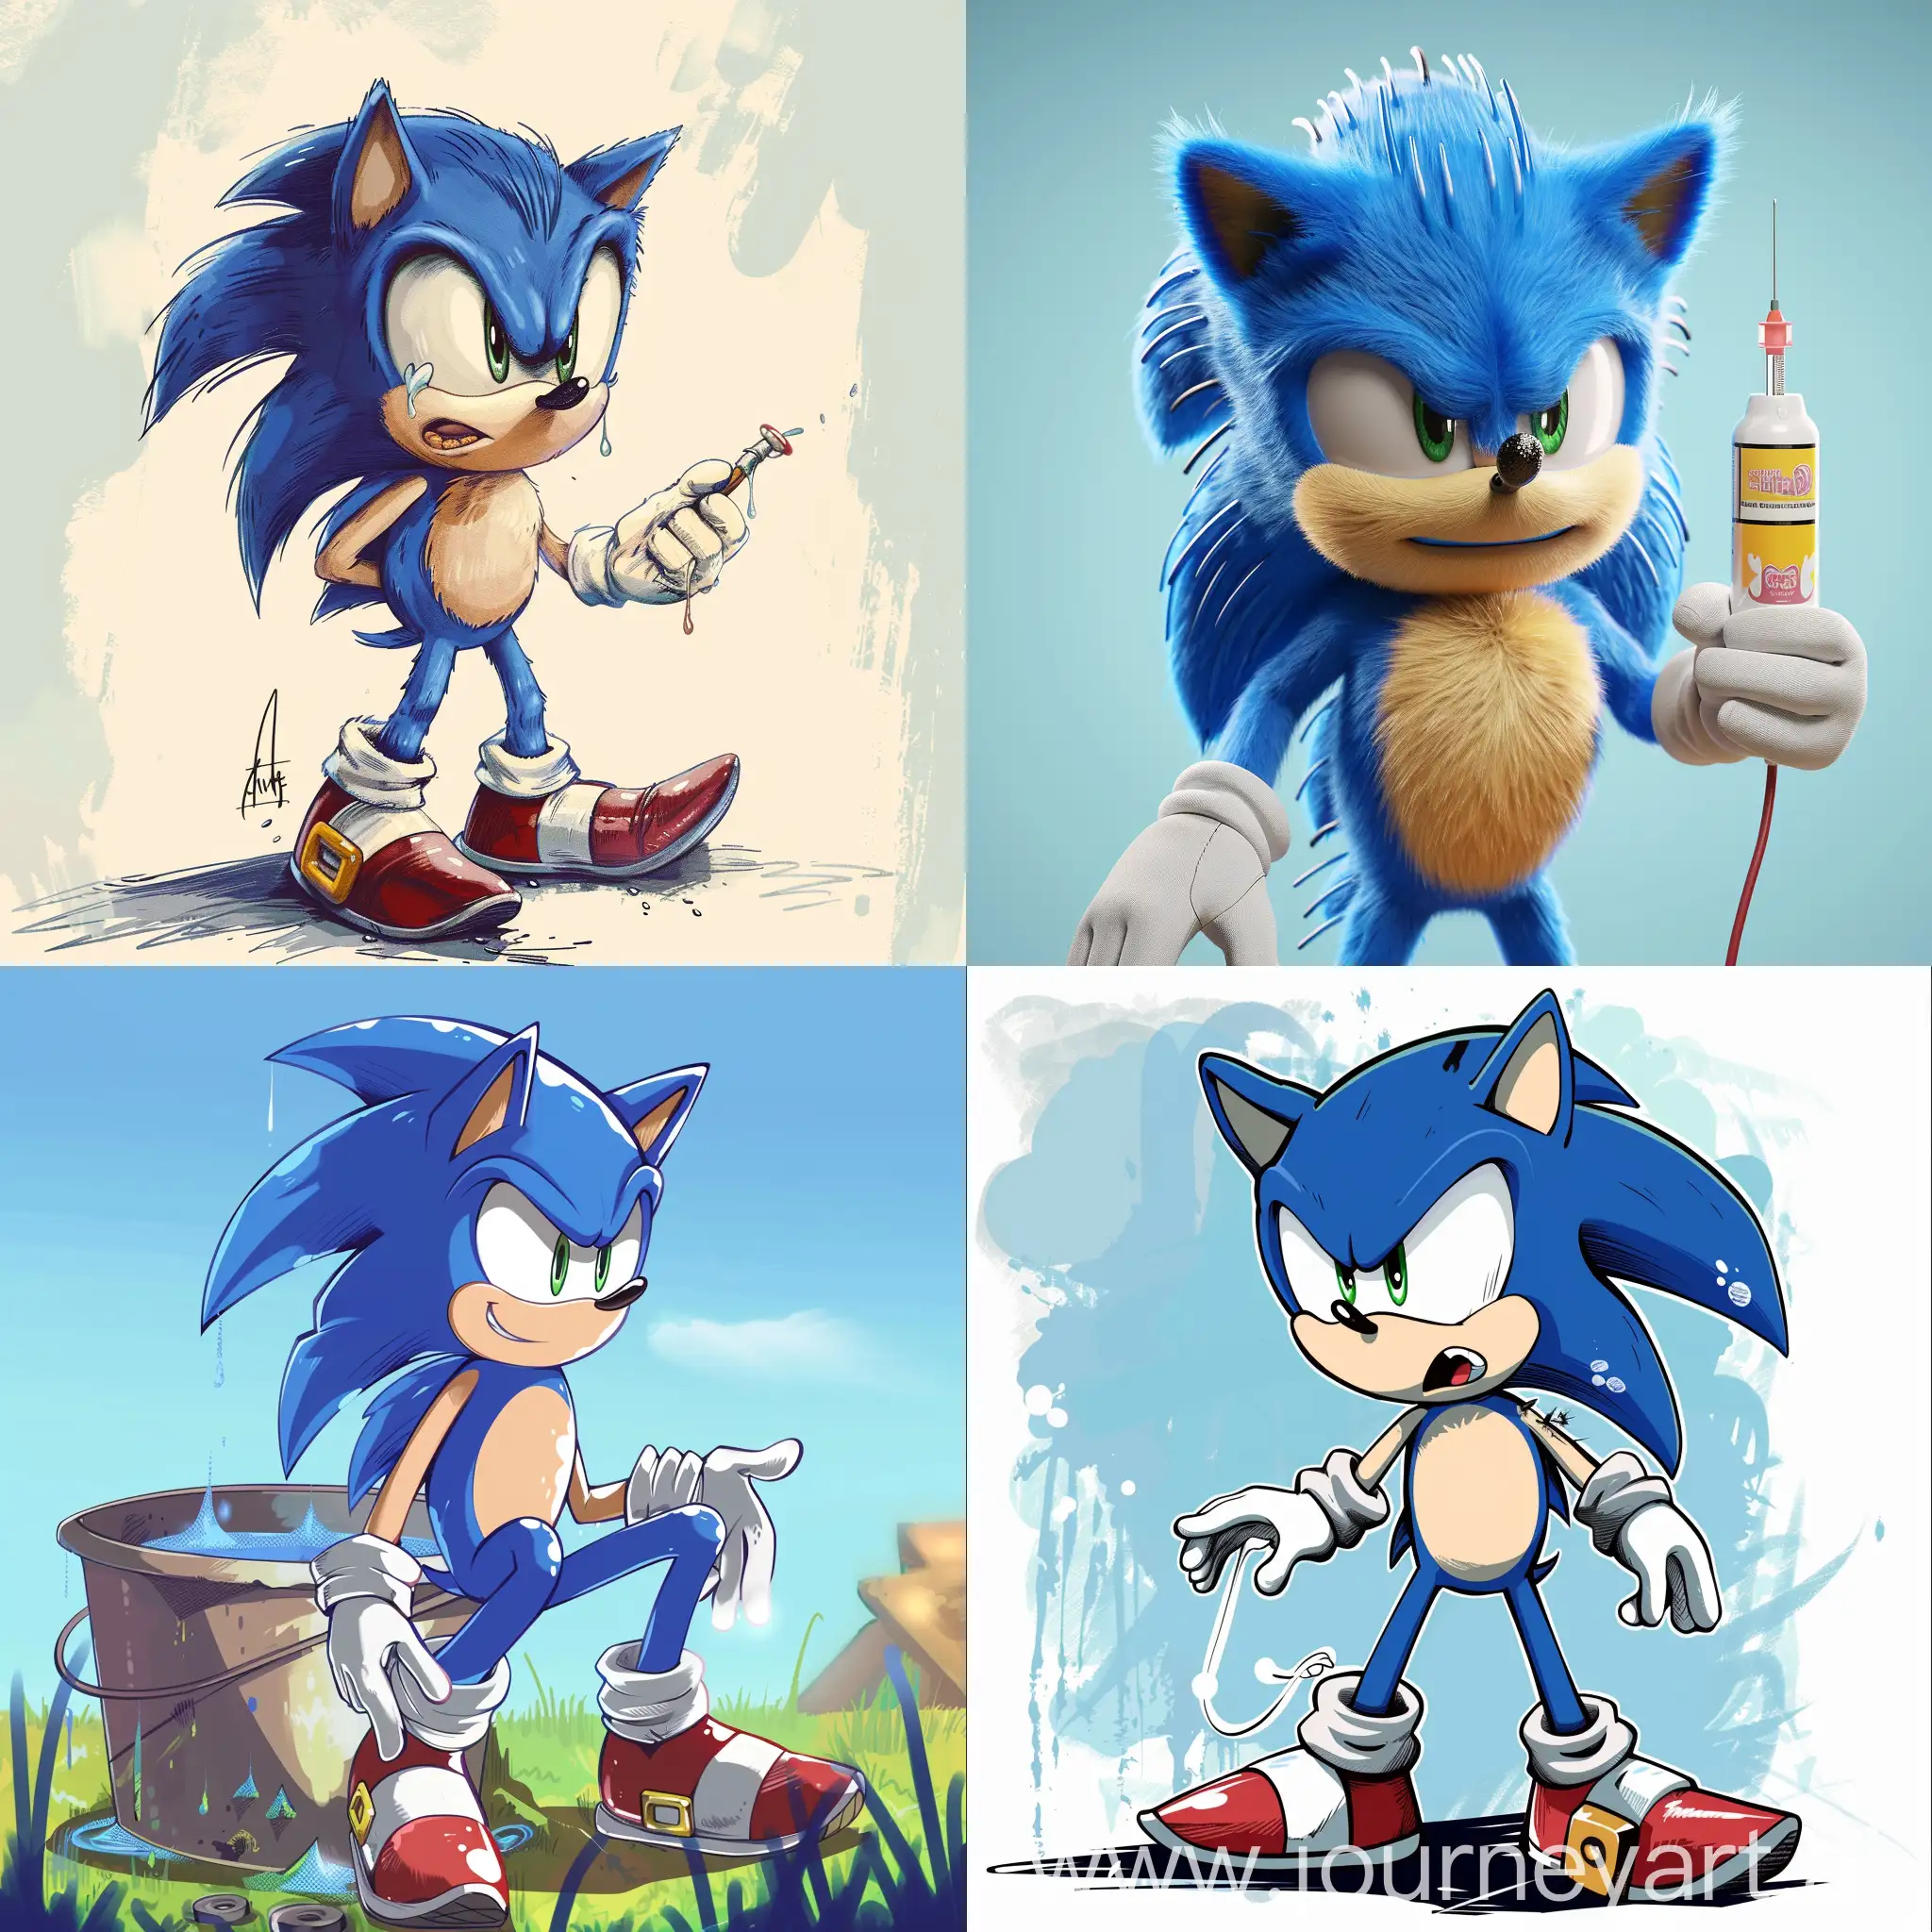 Sonic-the-Hedgehog-Receives-Enema-in-Vibrant-Artistic-Rendering